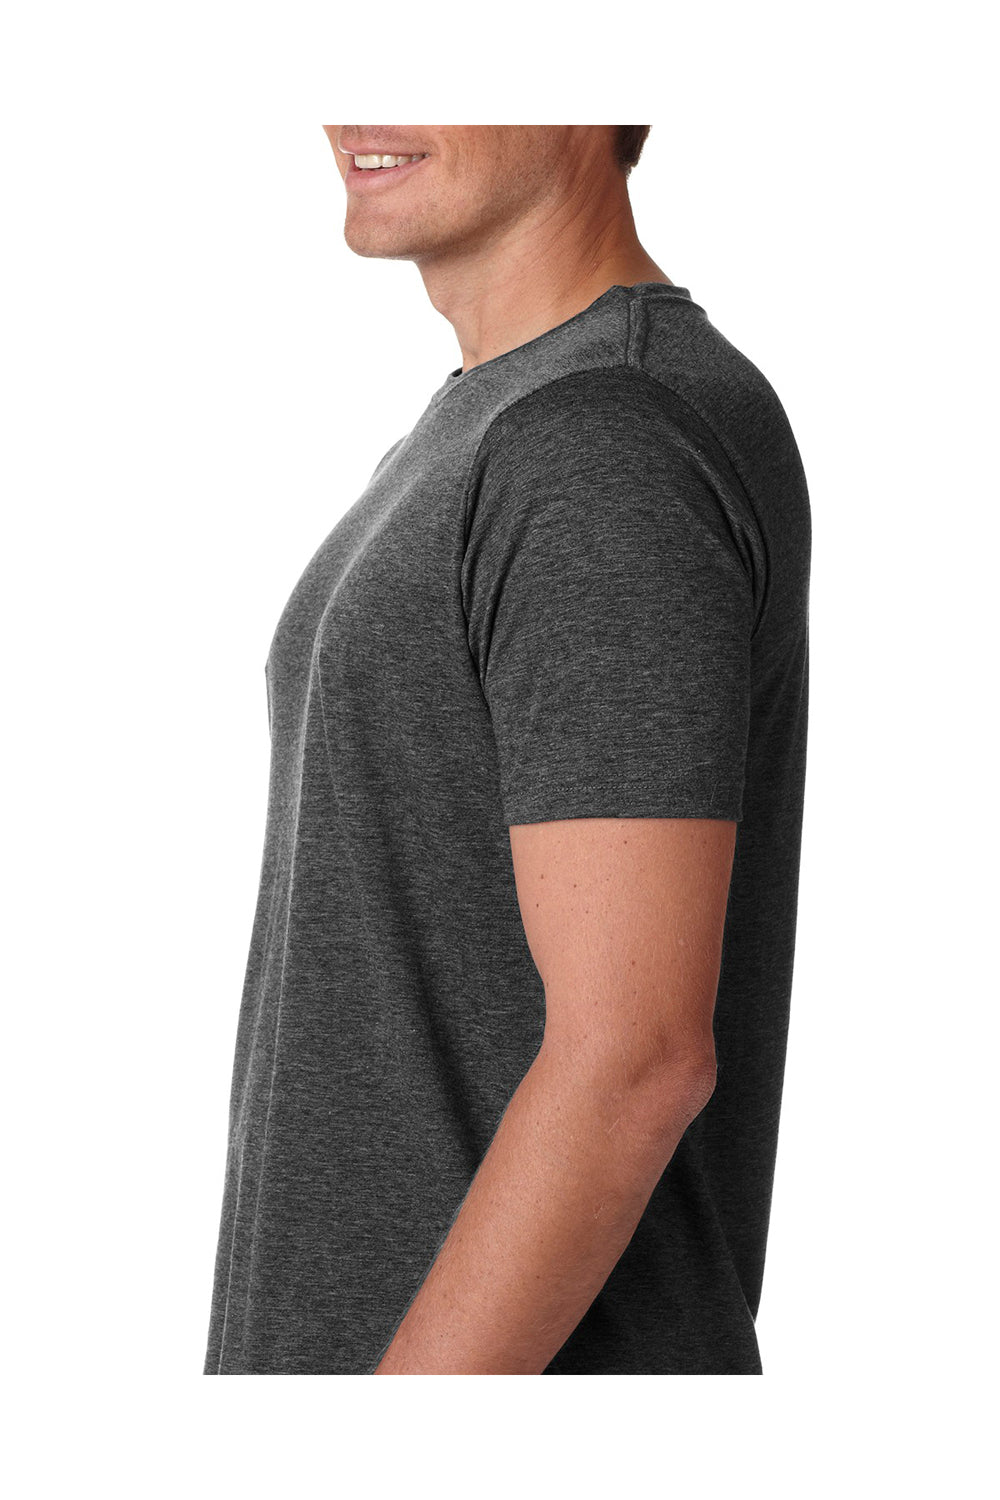 Next Level 6200 Mens Jersey Short Sleeve Crewneck T-Shirt Charcoal Grey Side